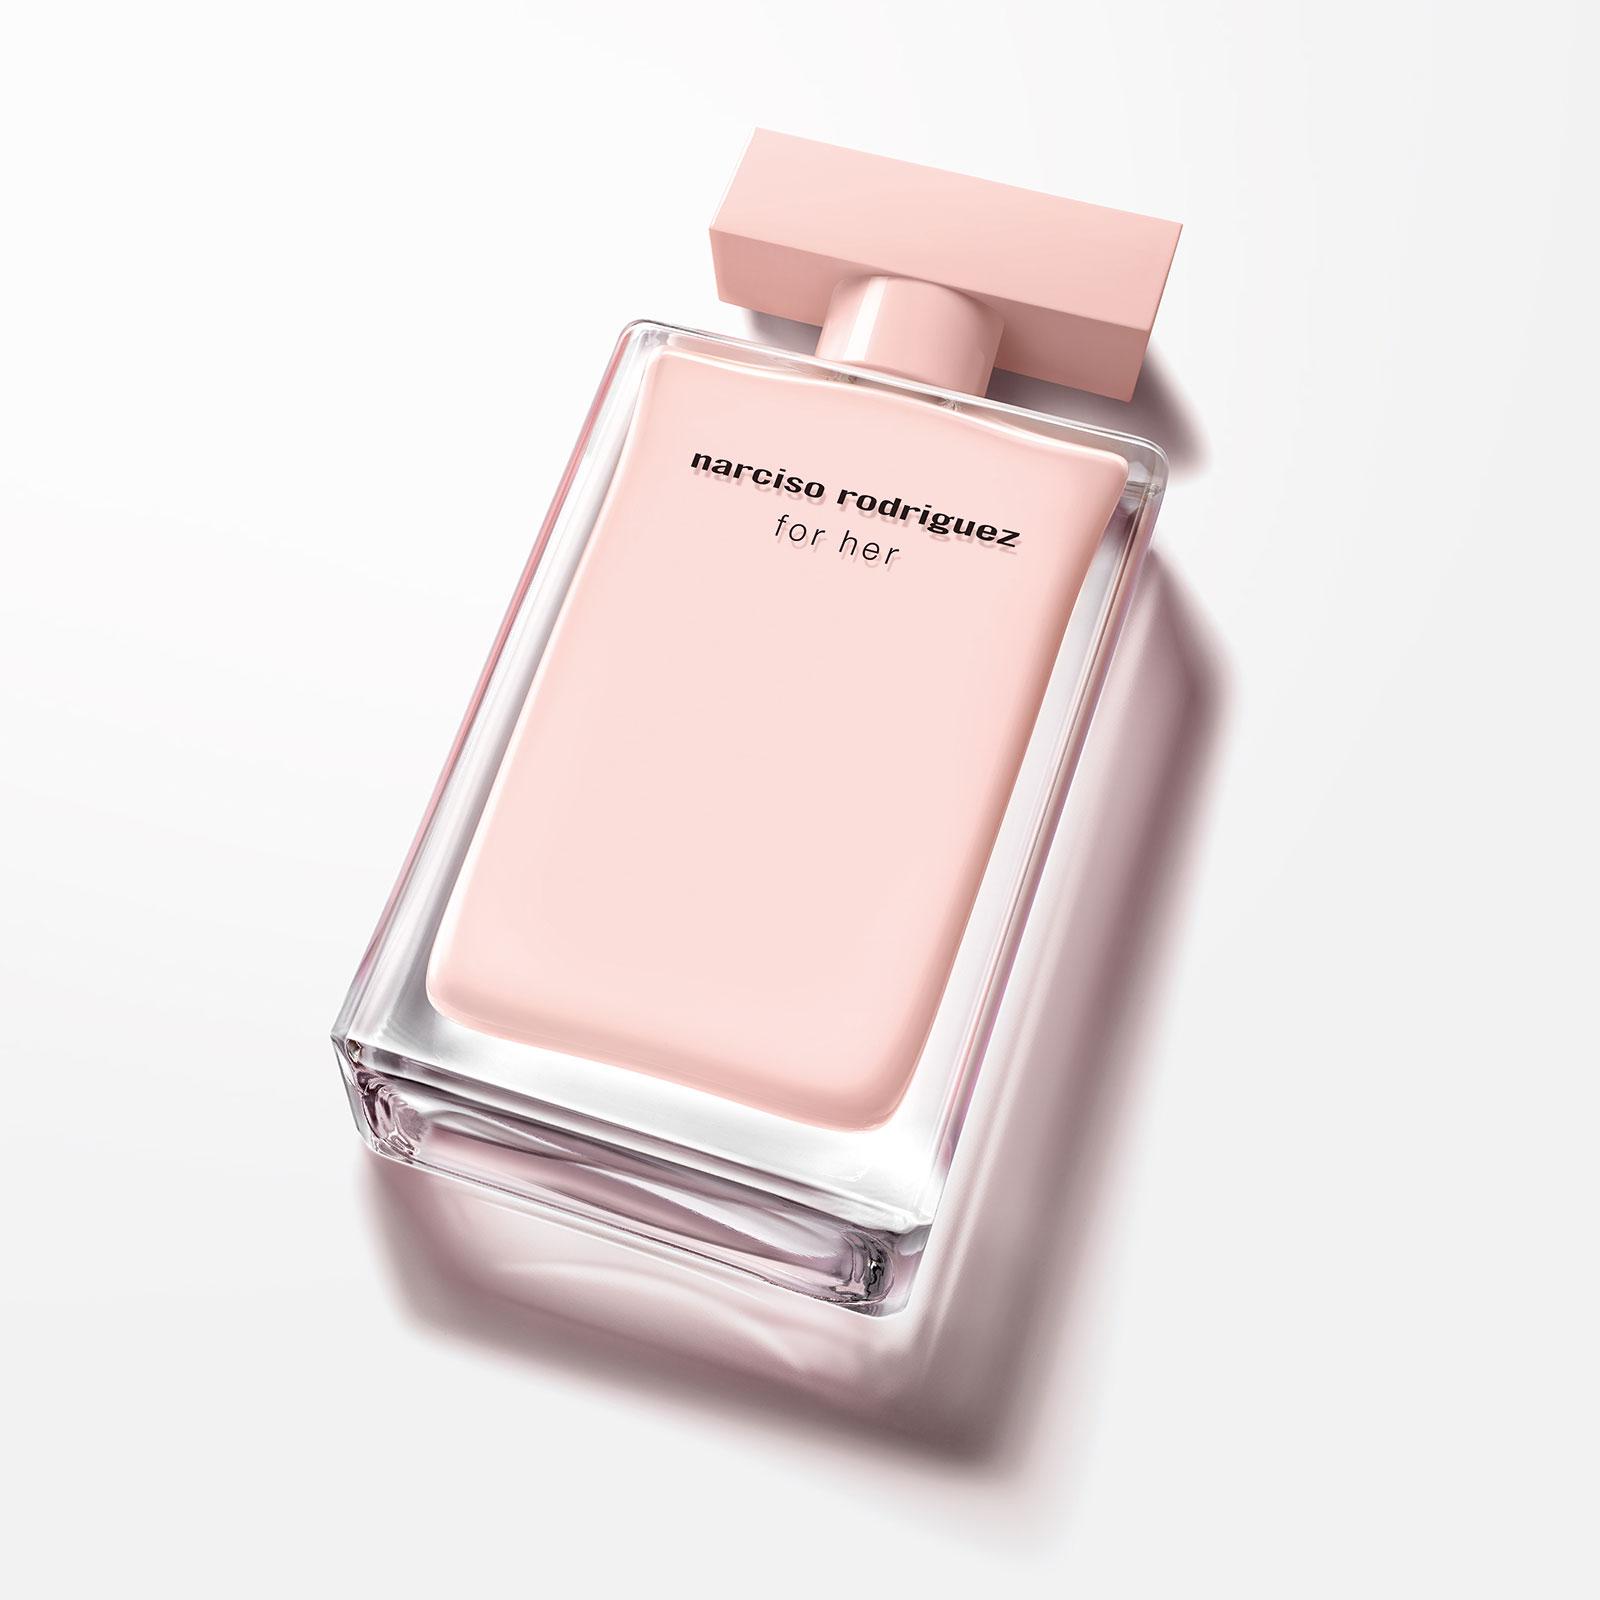 Narciso Rodriguez For Her Eau de Parfum 100ml | SEPHORA UK